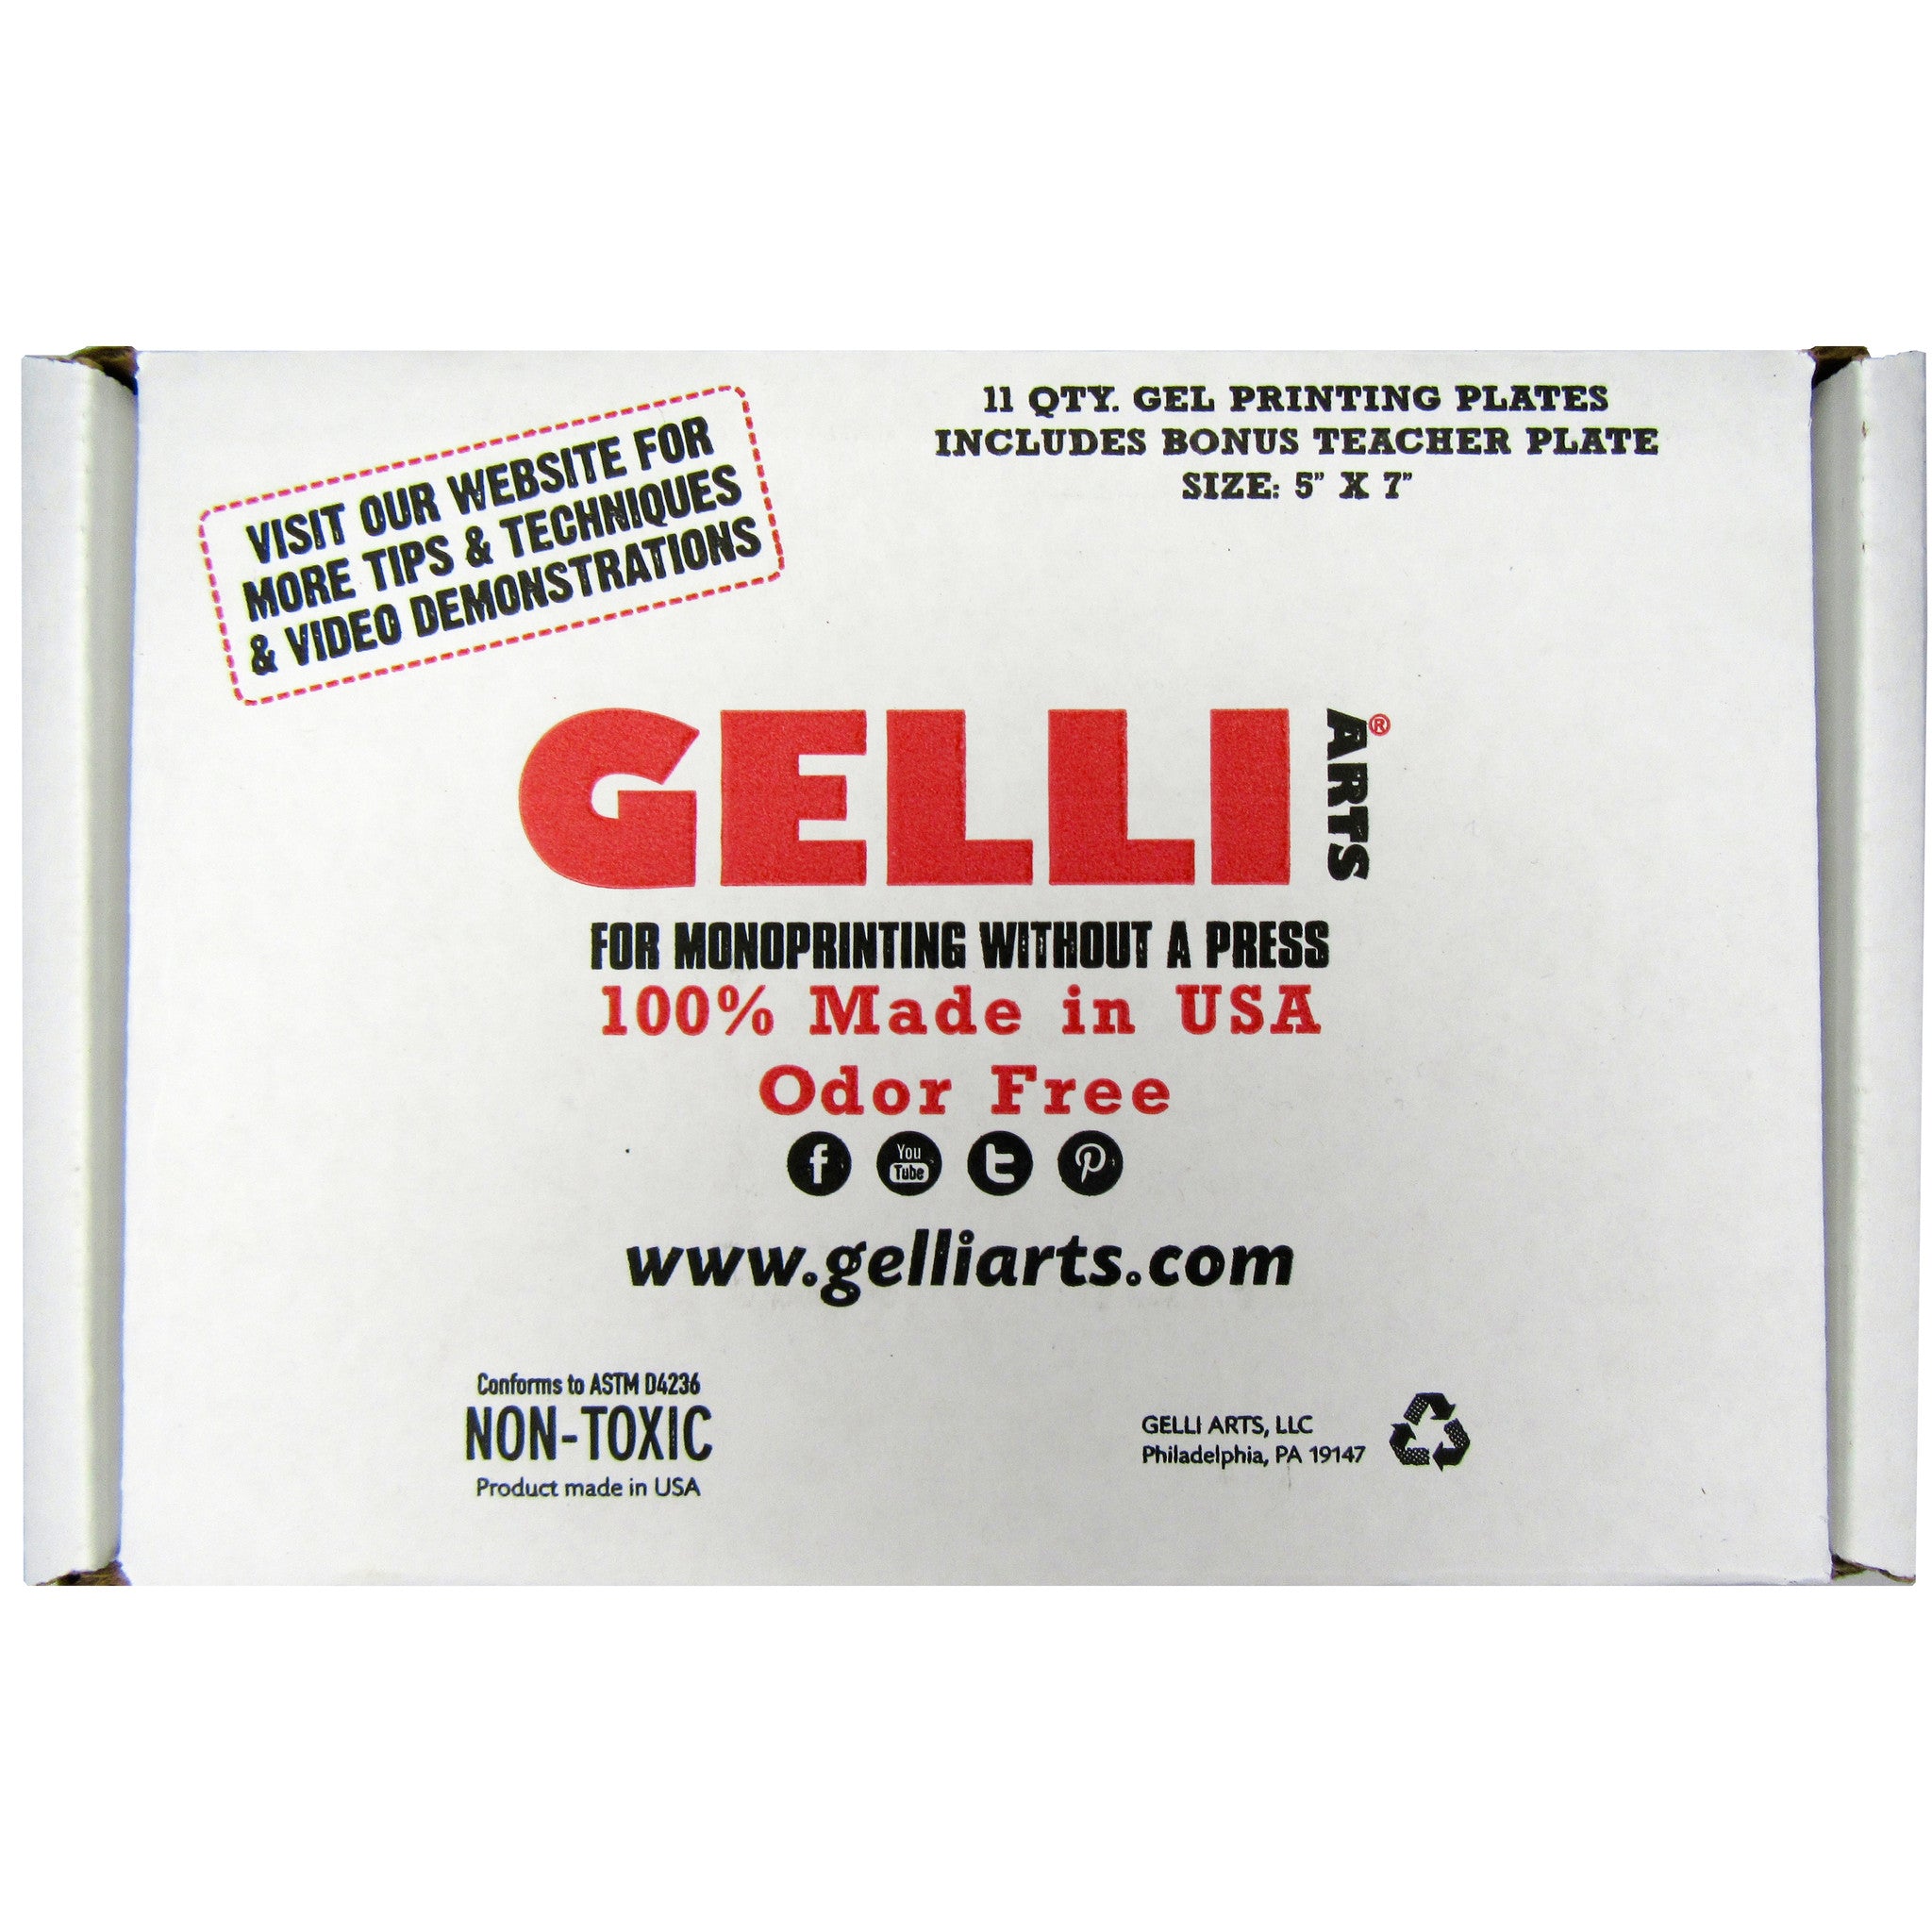 Gelli Plate - 8x10 Inch Class pack (11) - Seawhite of Brighton Ltd